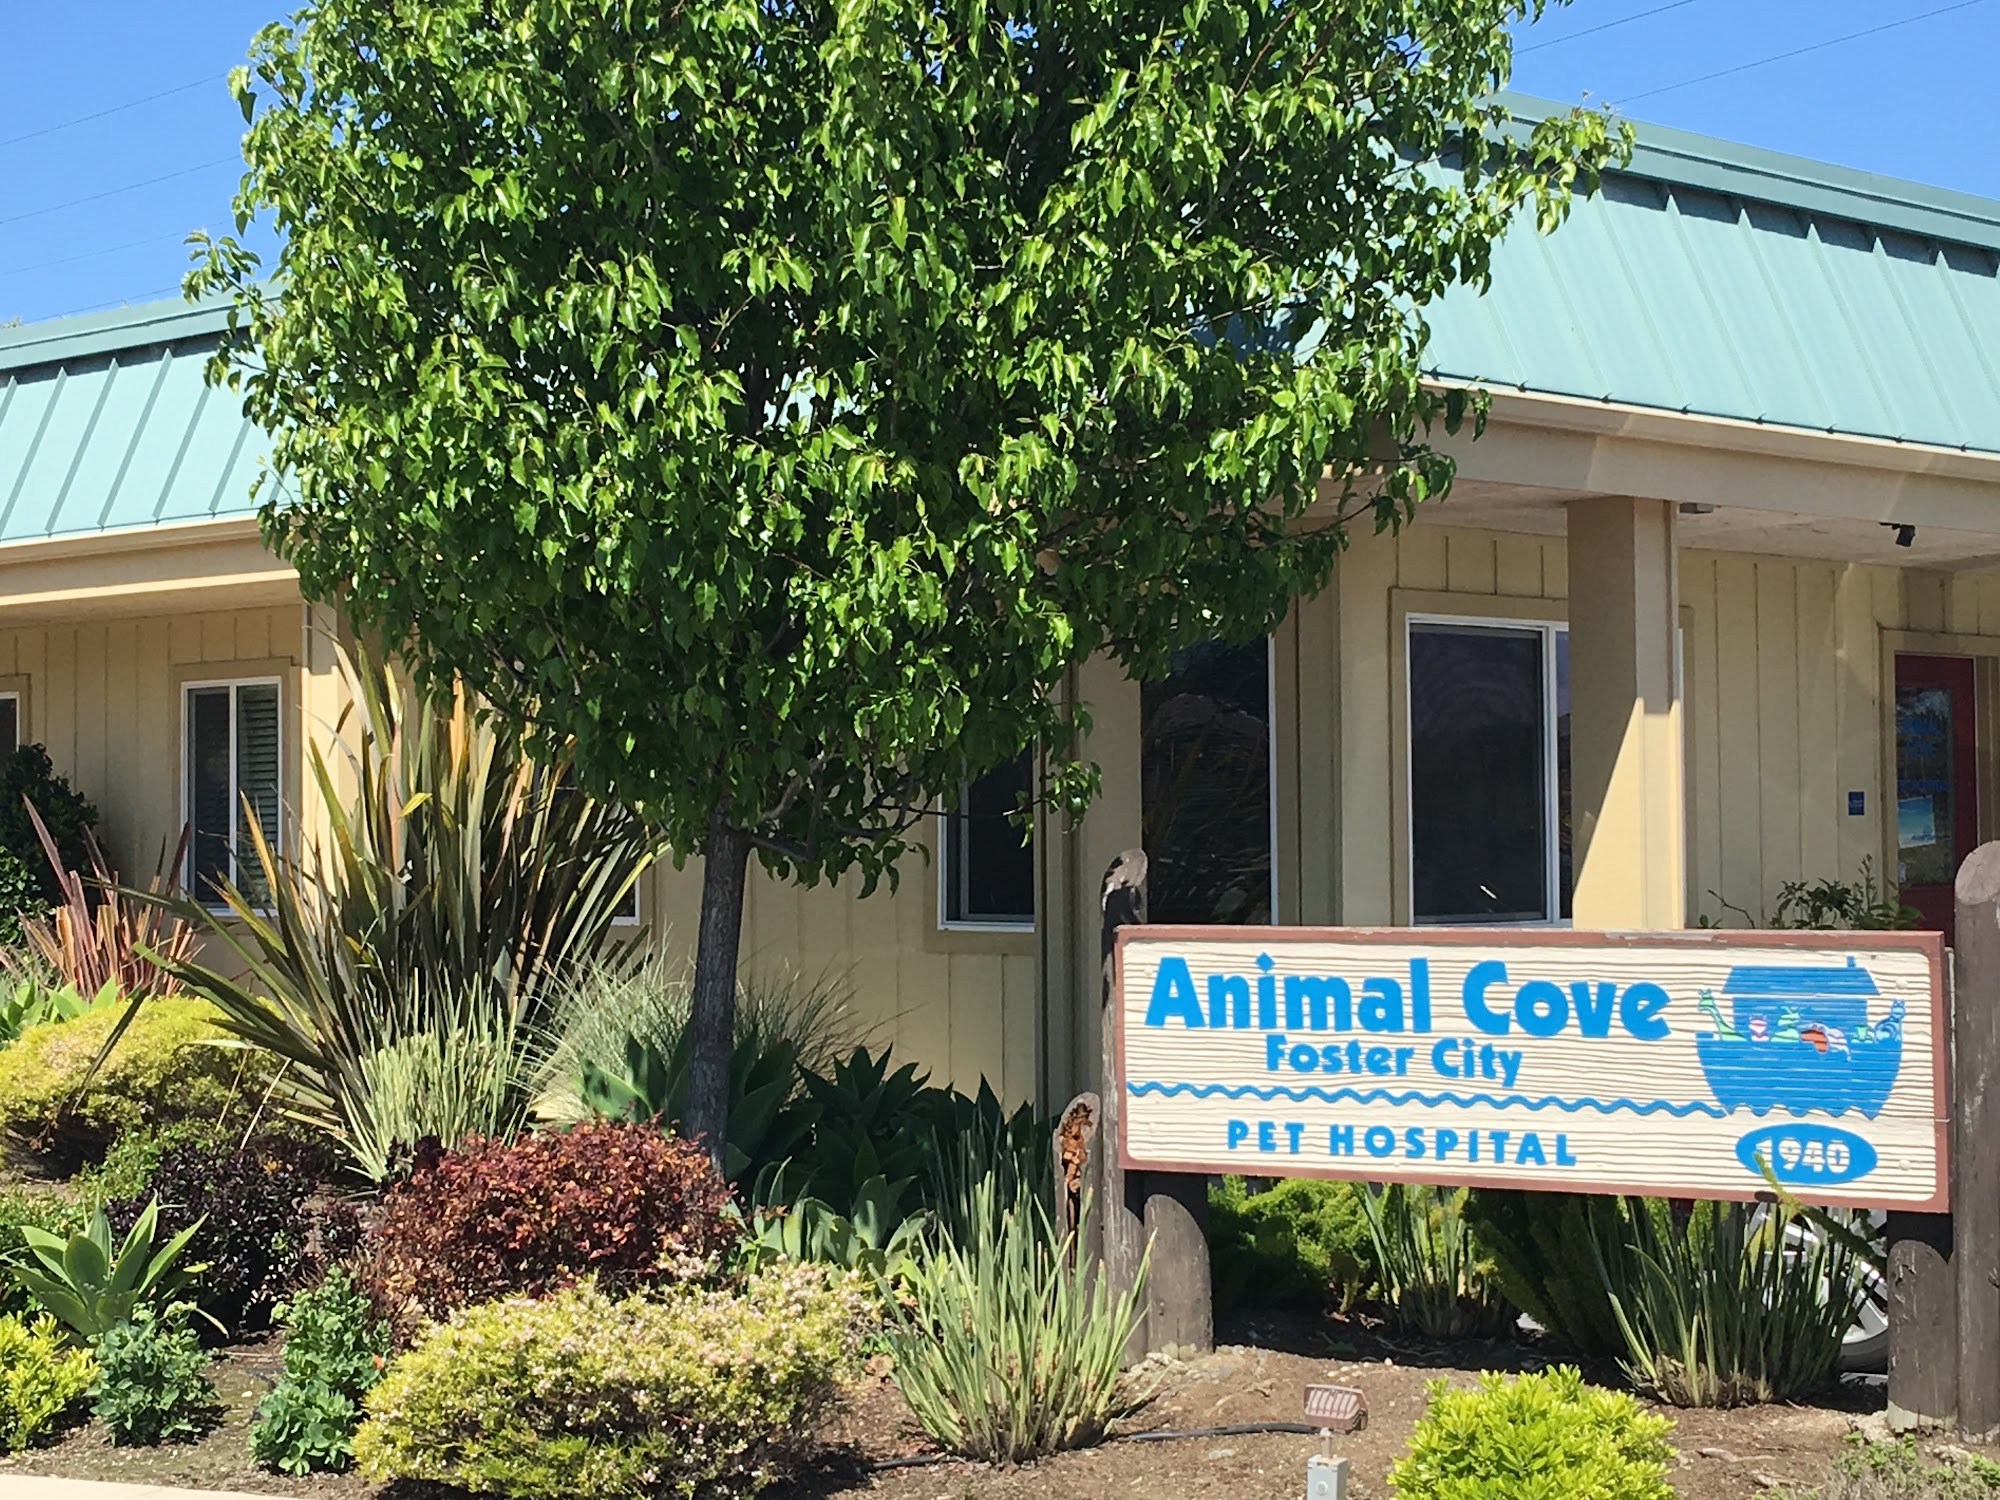 Animal Cove Pet Hospital